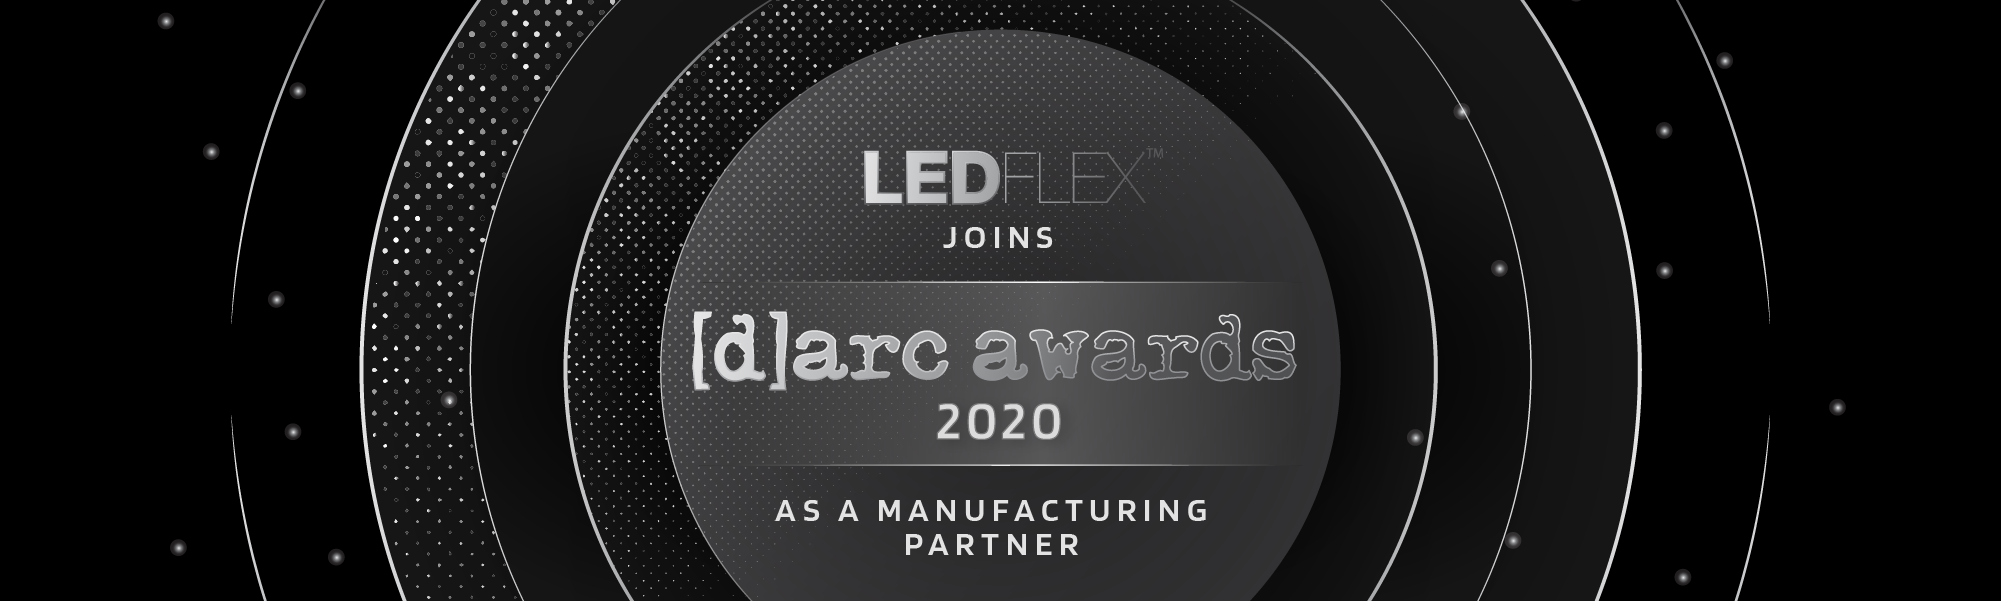 LEDFlex joins Darc Awards as Manufacturing Partner 